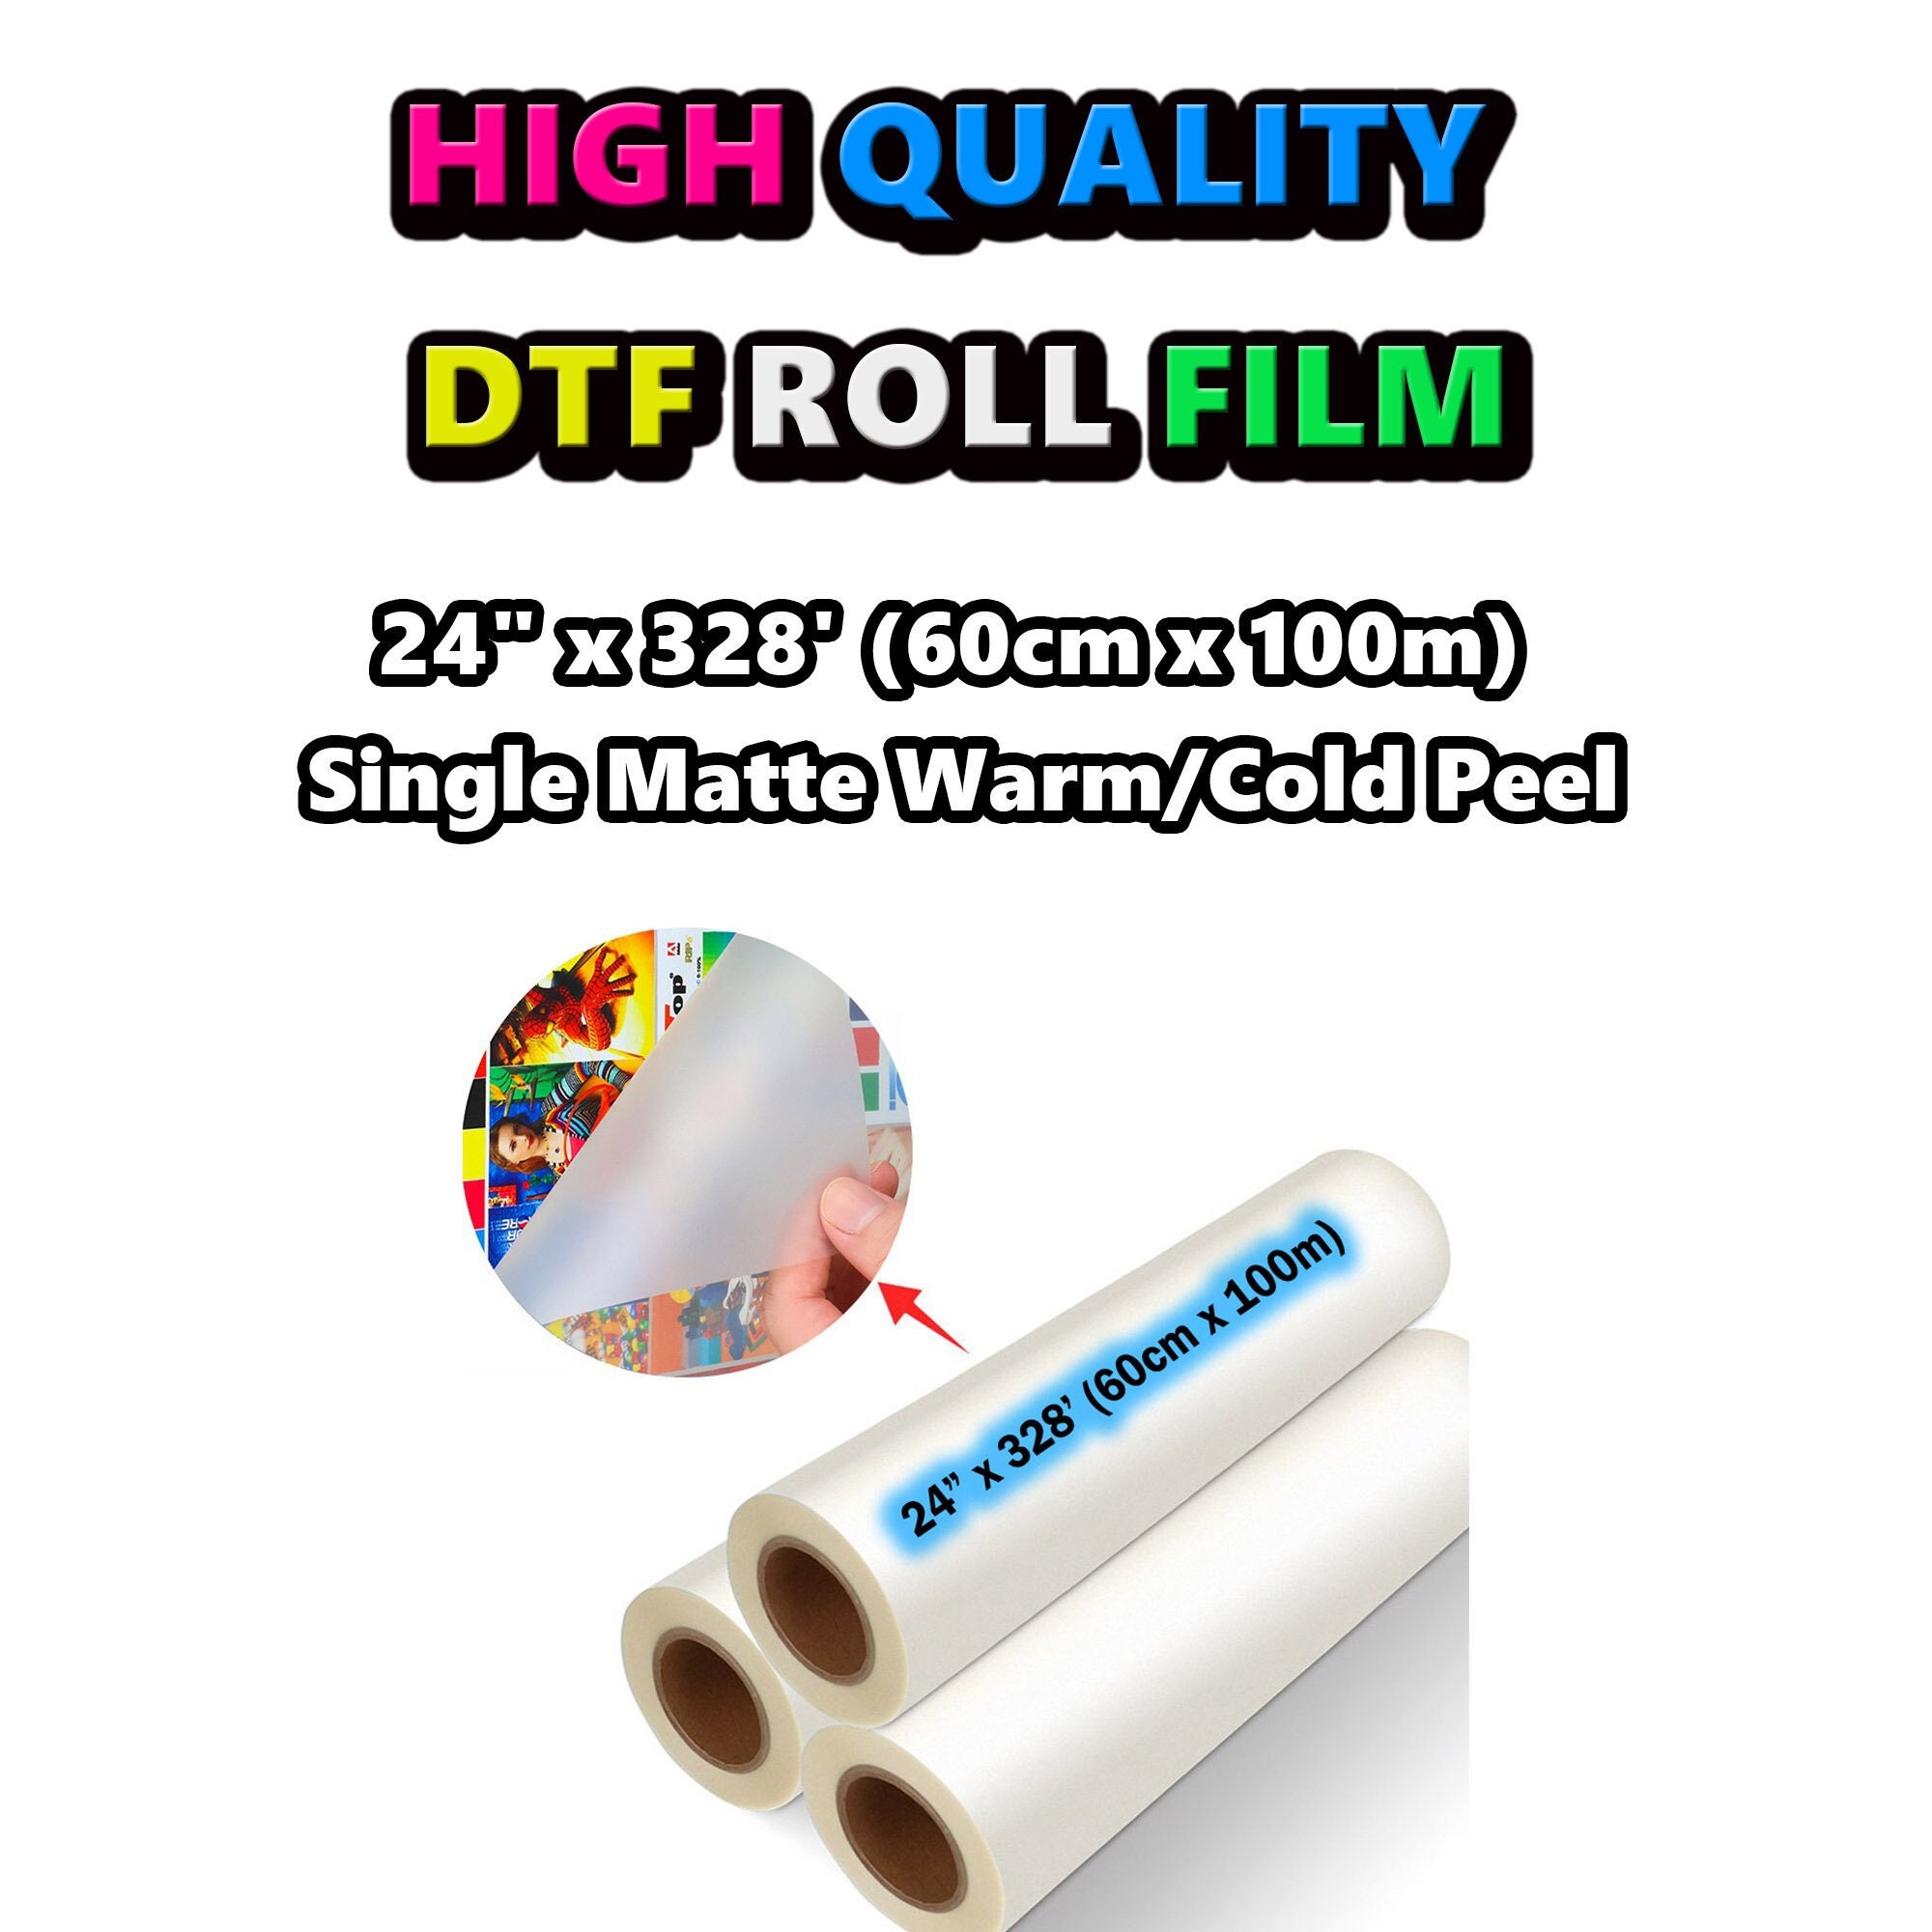 DTF roll film 60 cm x 100 m (hot peeling)